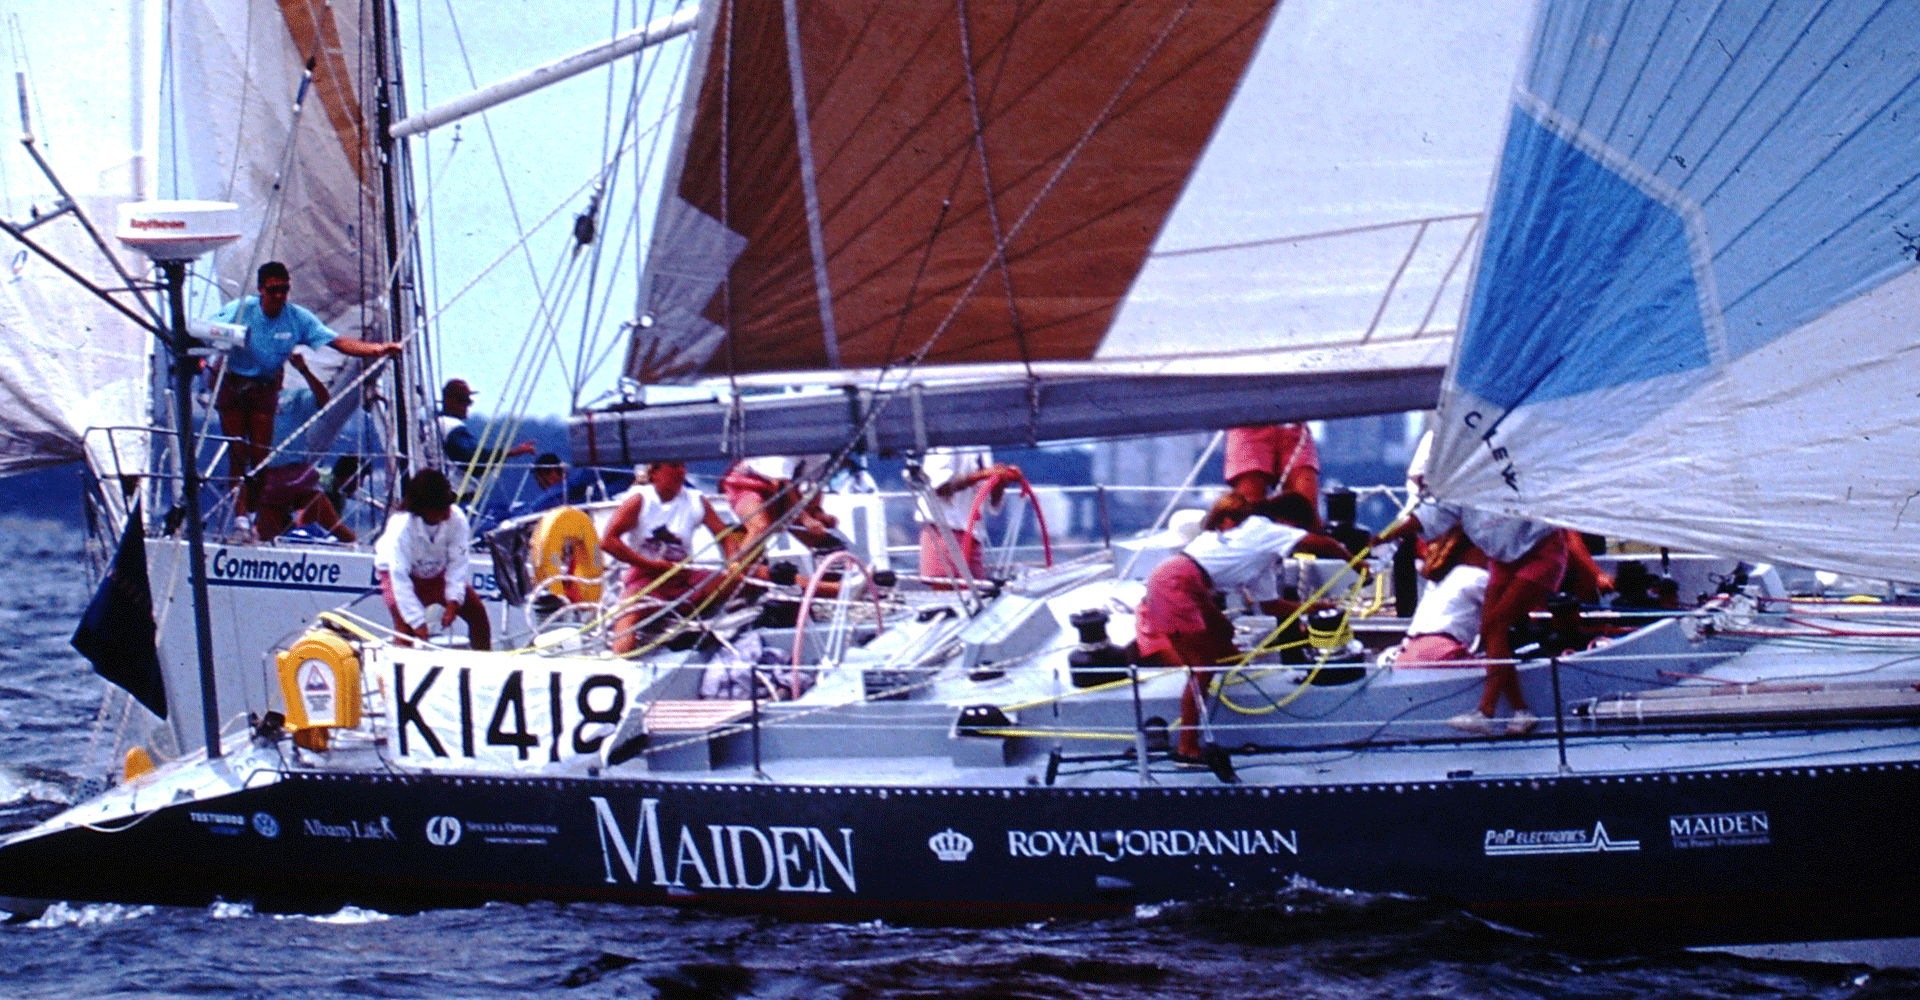 Maiden Sailing